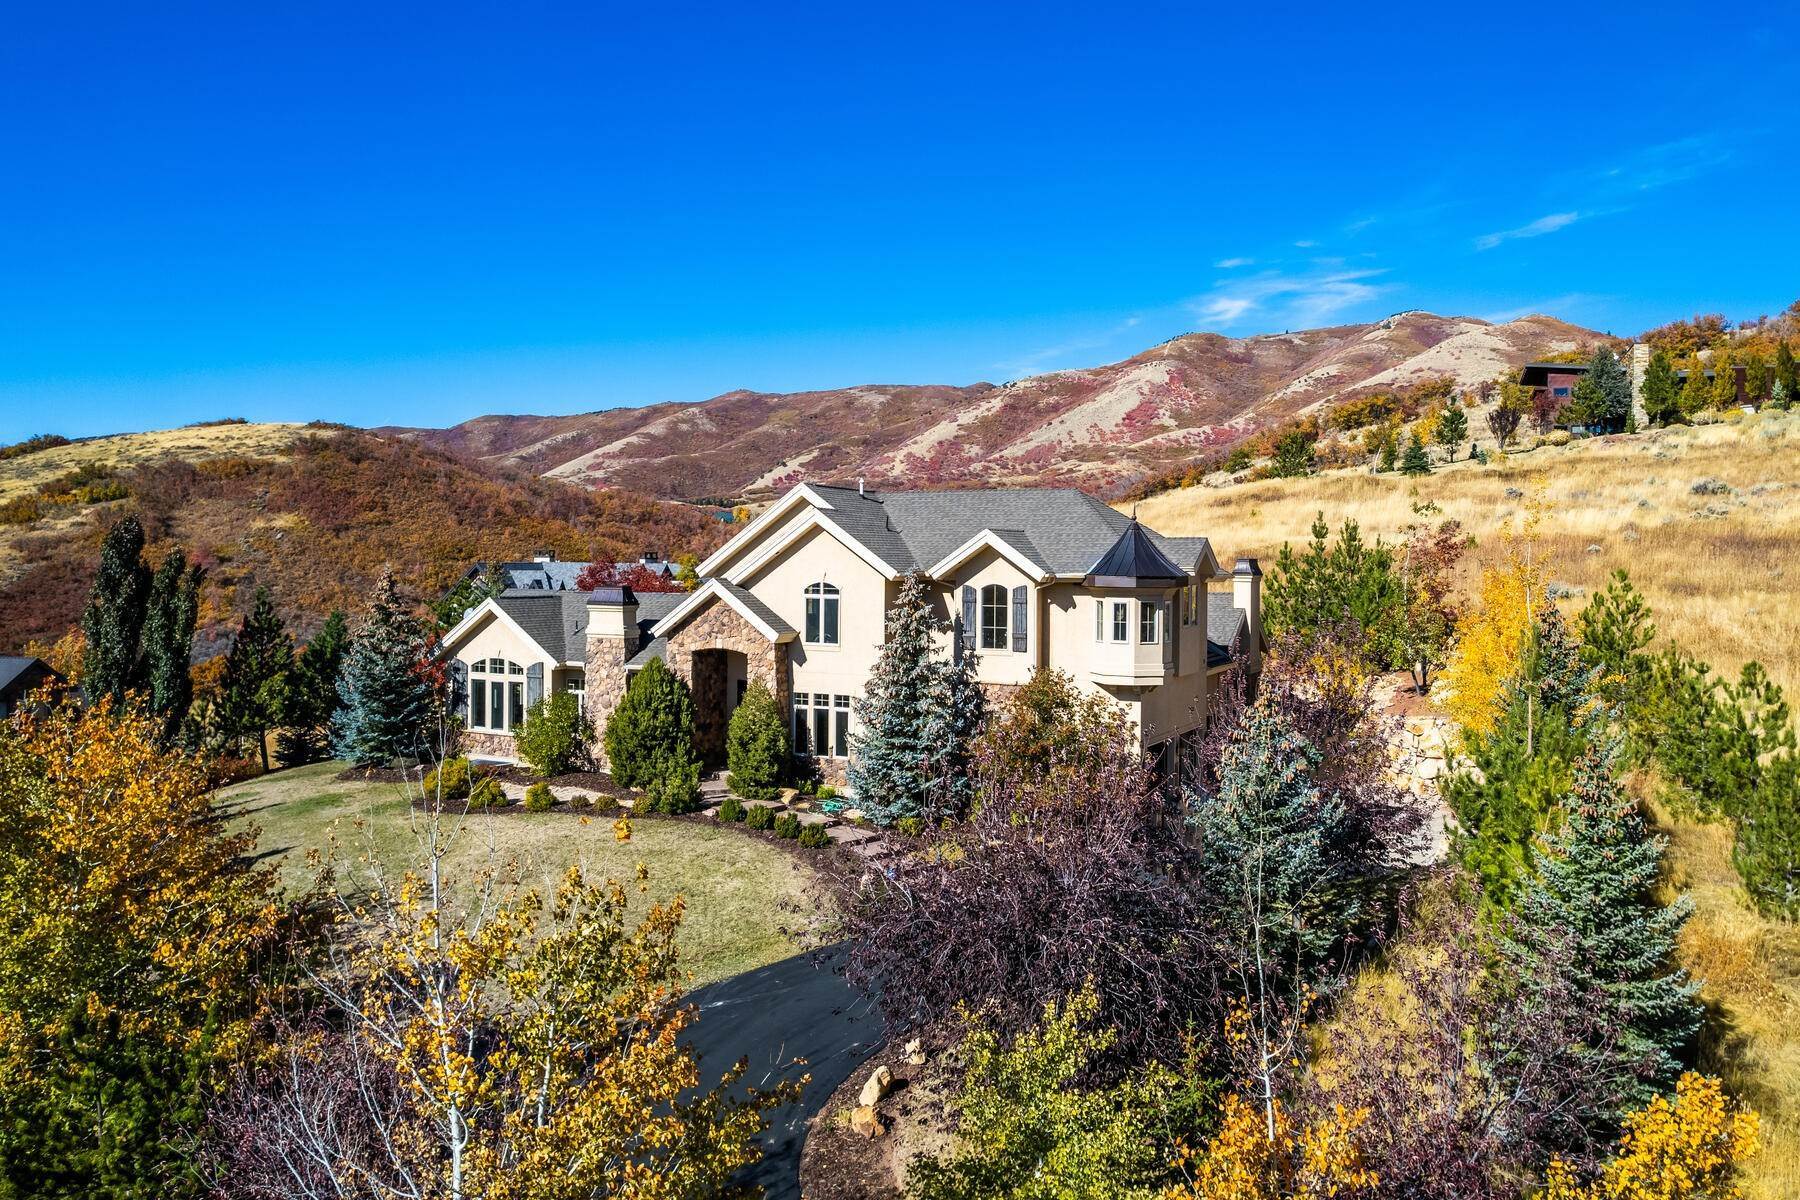 Property for Sale at Peaceful Serene Emigration Canyon Home 617 Pioneer Fork Rd Salt Lake City, Utah 84108 United States